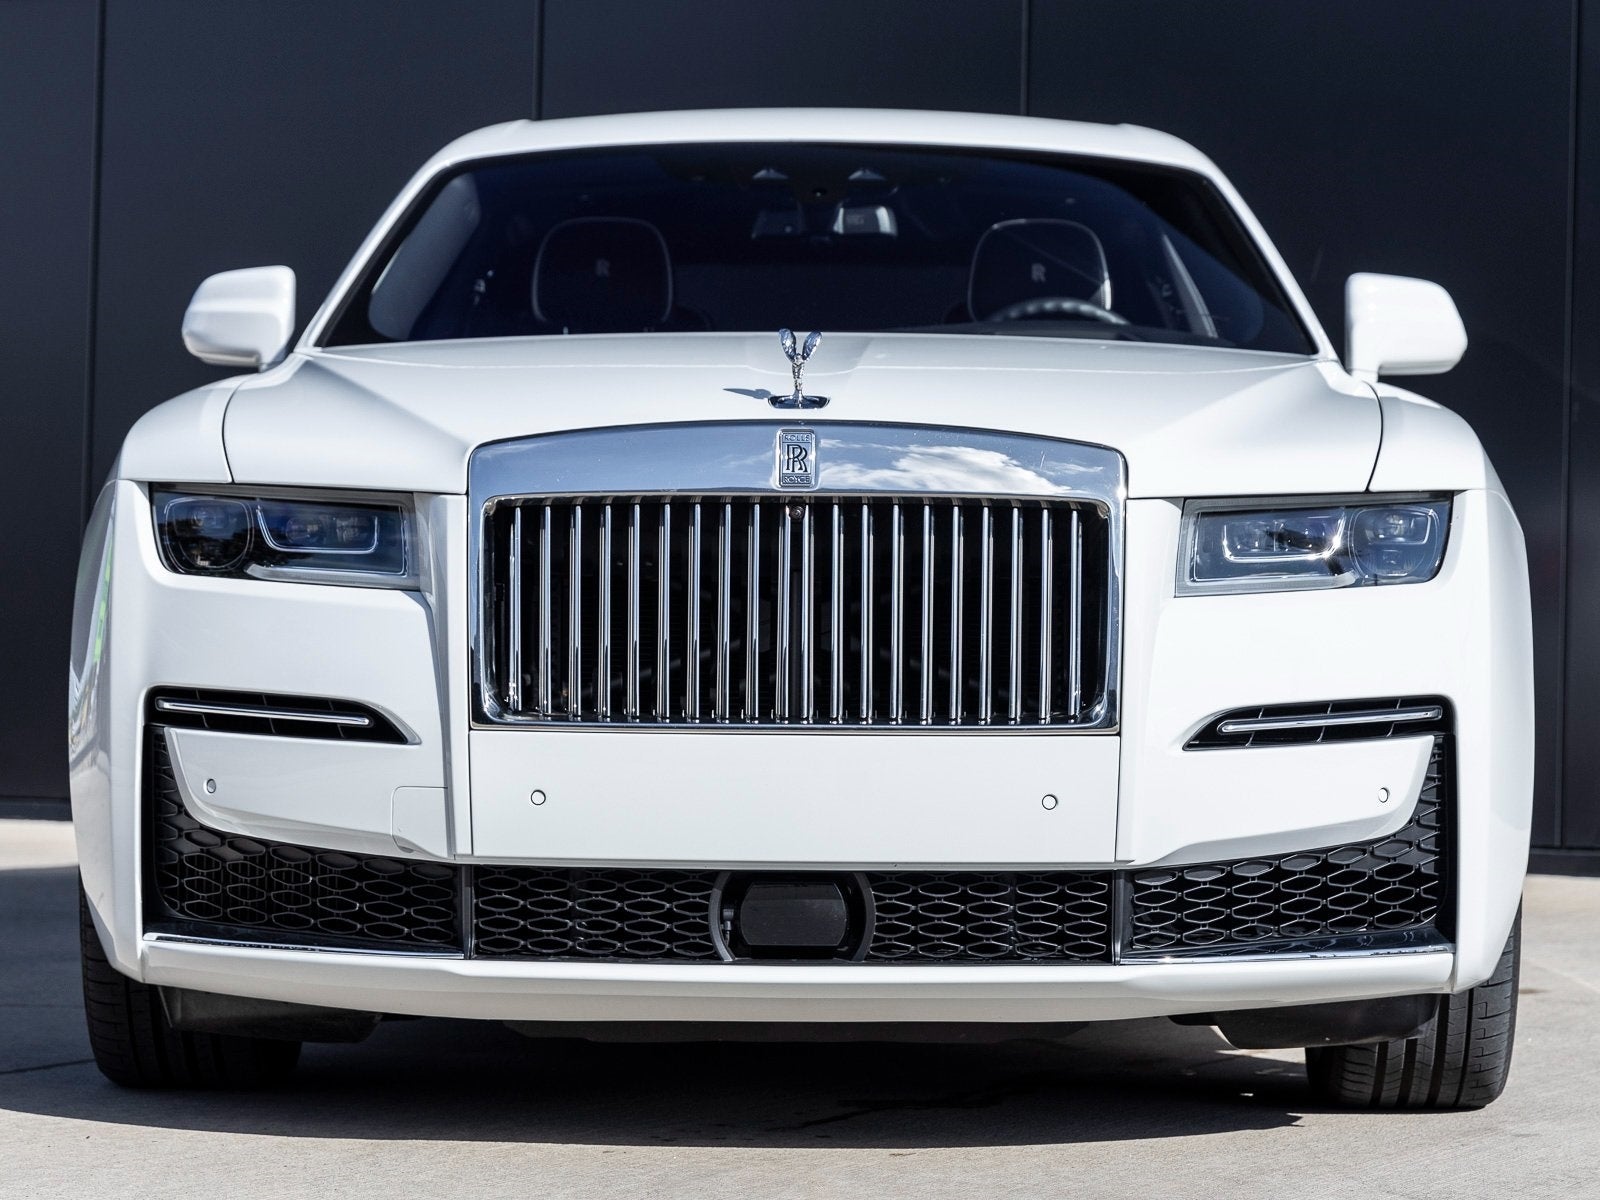 Rolls-Royce Ghost Extended (CITY) TX  Rolls-Royce Motor Cars North Houston